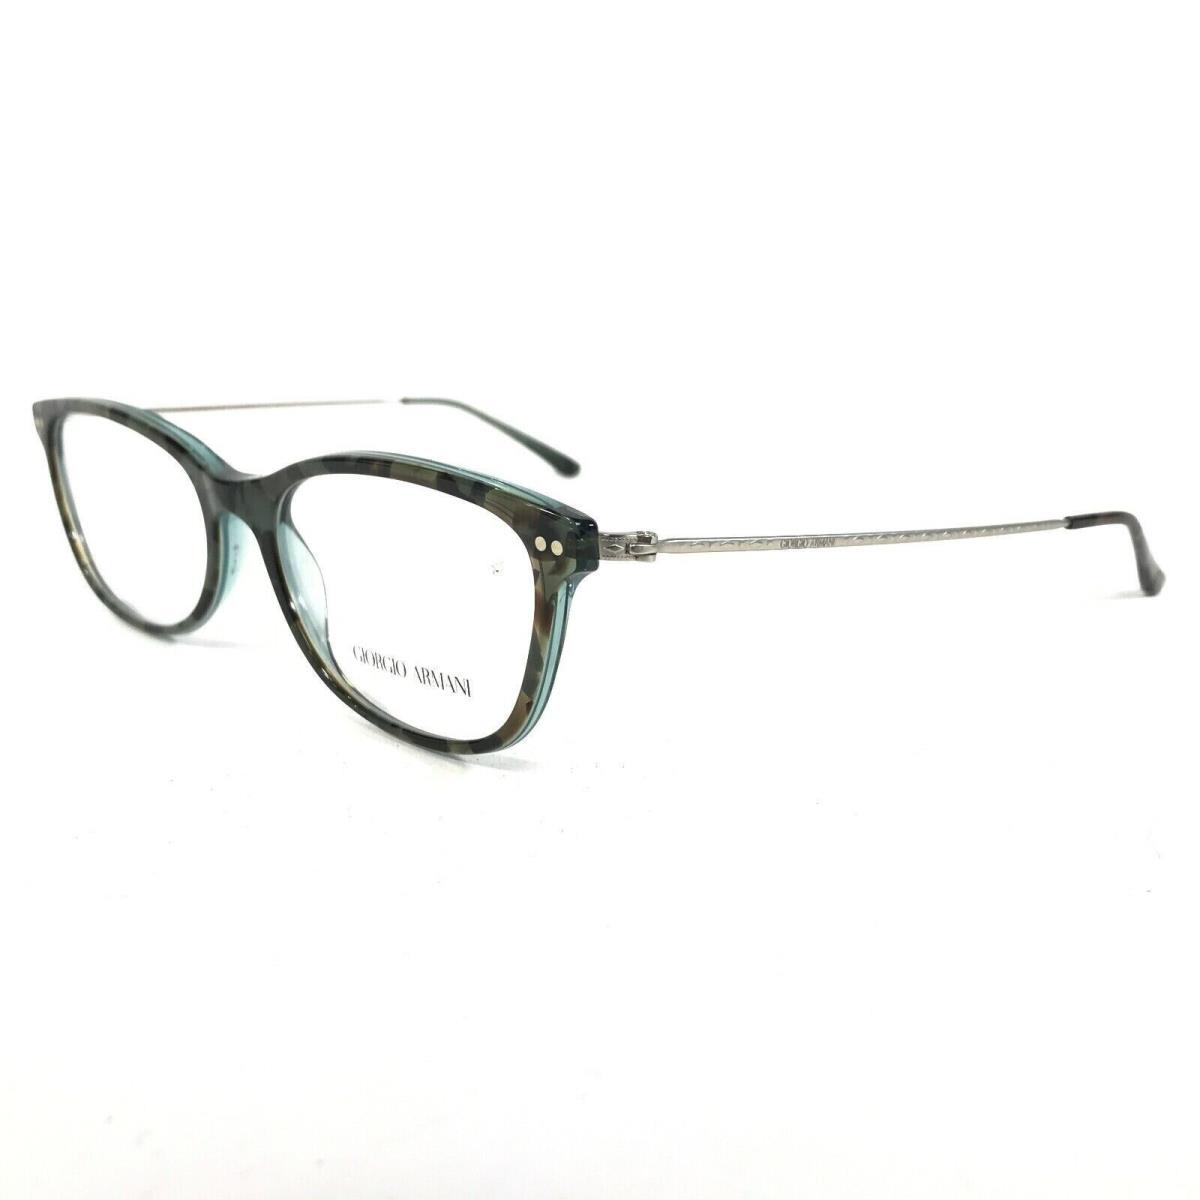 Giorgio Armani Eyeglasses AR7084 5433 Blue Tortoise Frames 54MM Rx-able ST